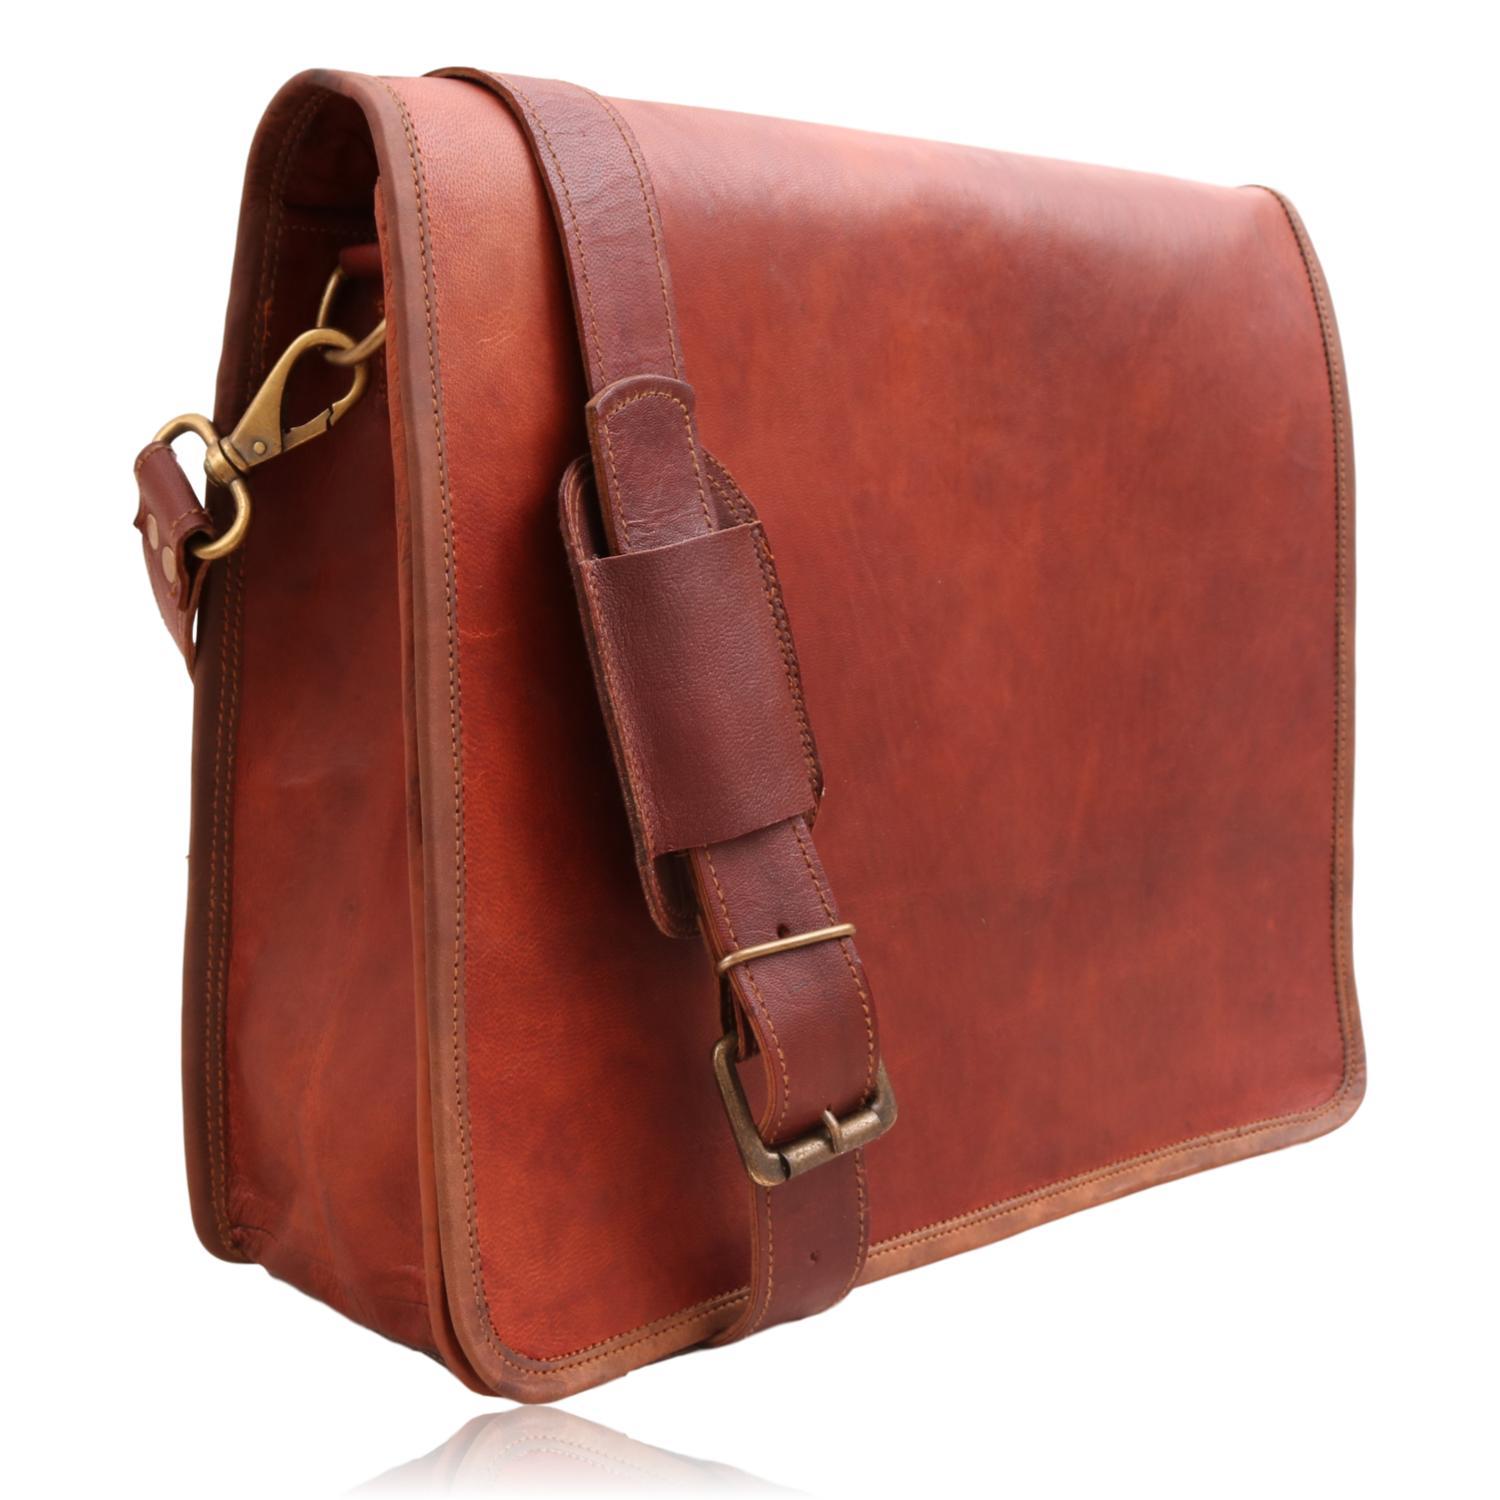 Deluxe Shoulder Messenger Bags | Quvom.com